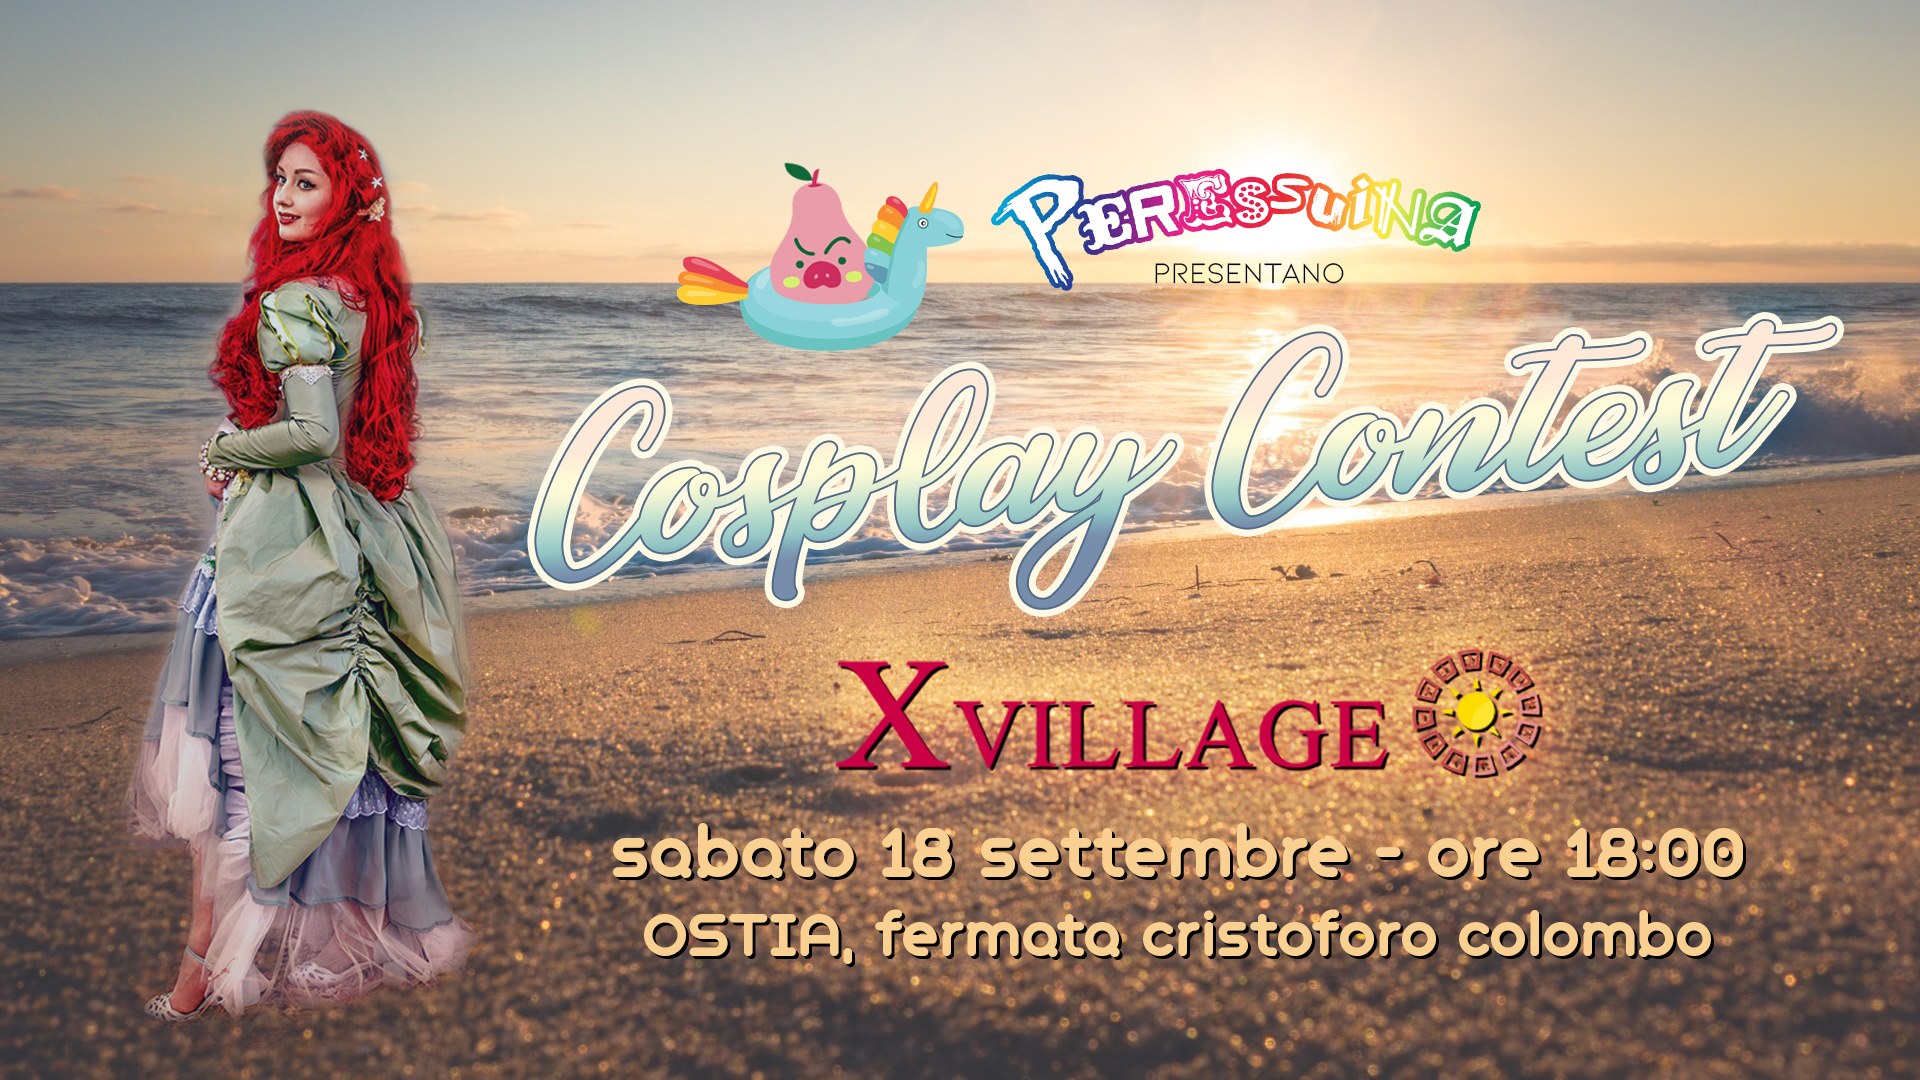 Cosplay Contest @ XVillage Ostia